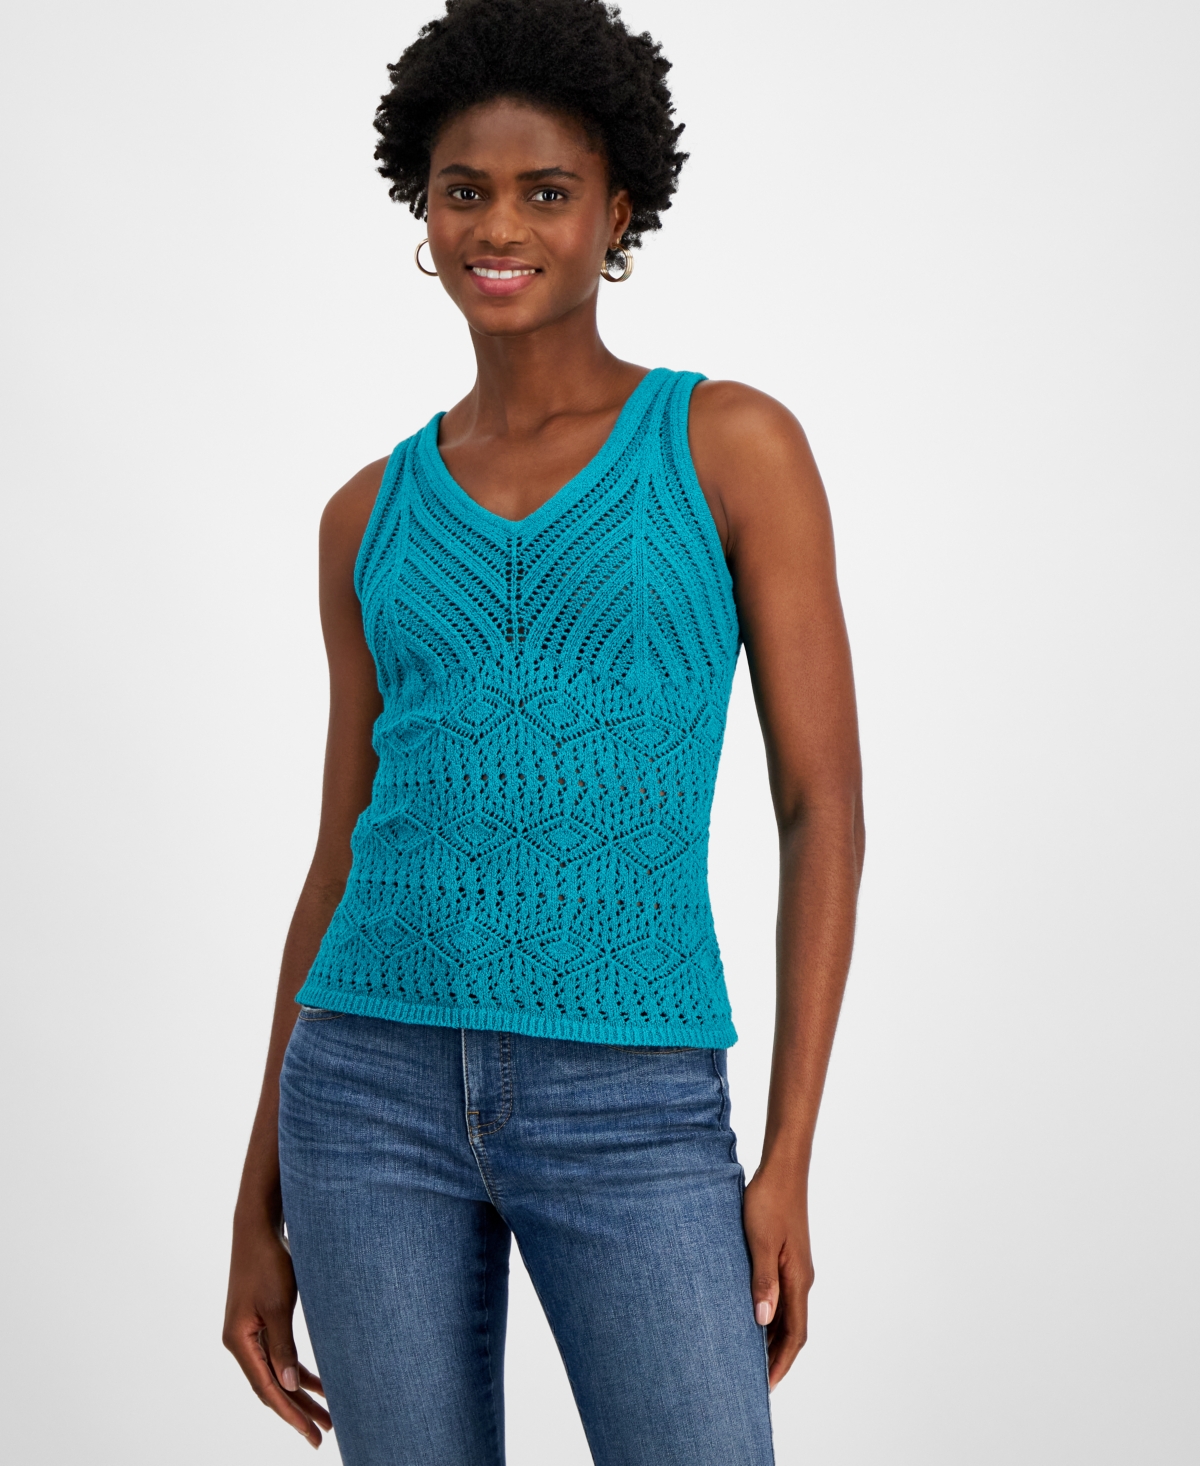 Women's Crochet Tank Top, Created for Macy's - Brazilian Sand